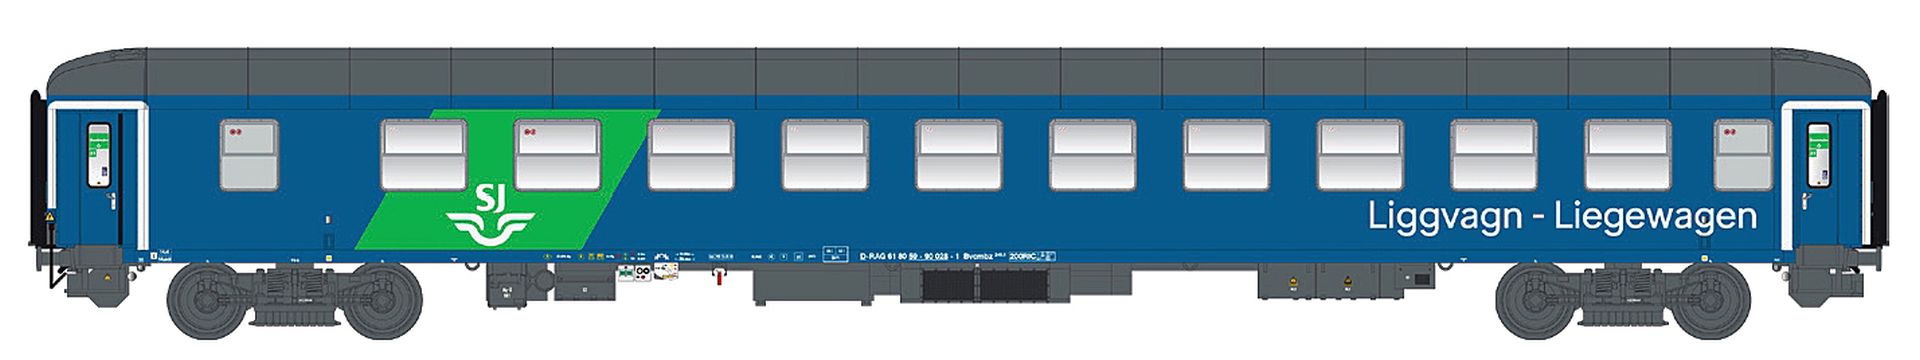 L.S. Models 48094 - Liegewagen Bvcmbz 249.1, RDC/SJ, Ep.VI, EN 346